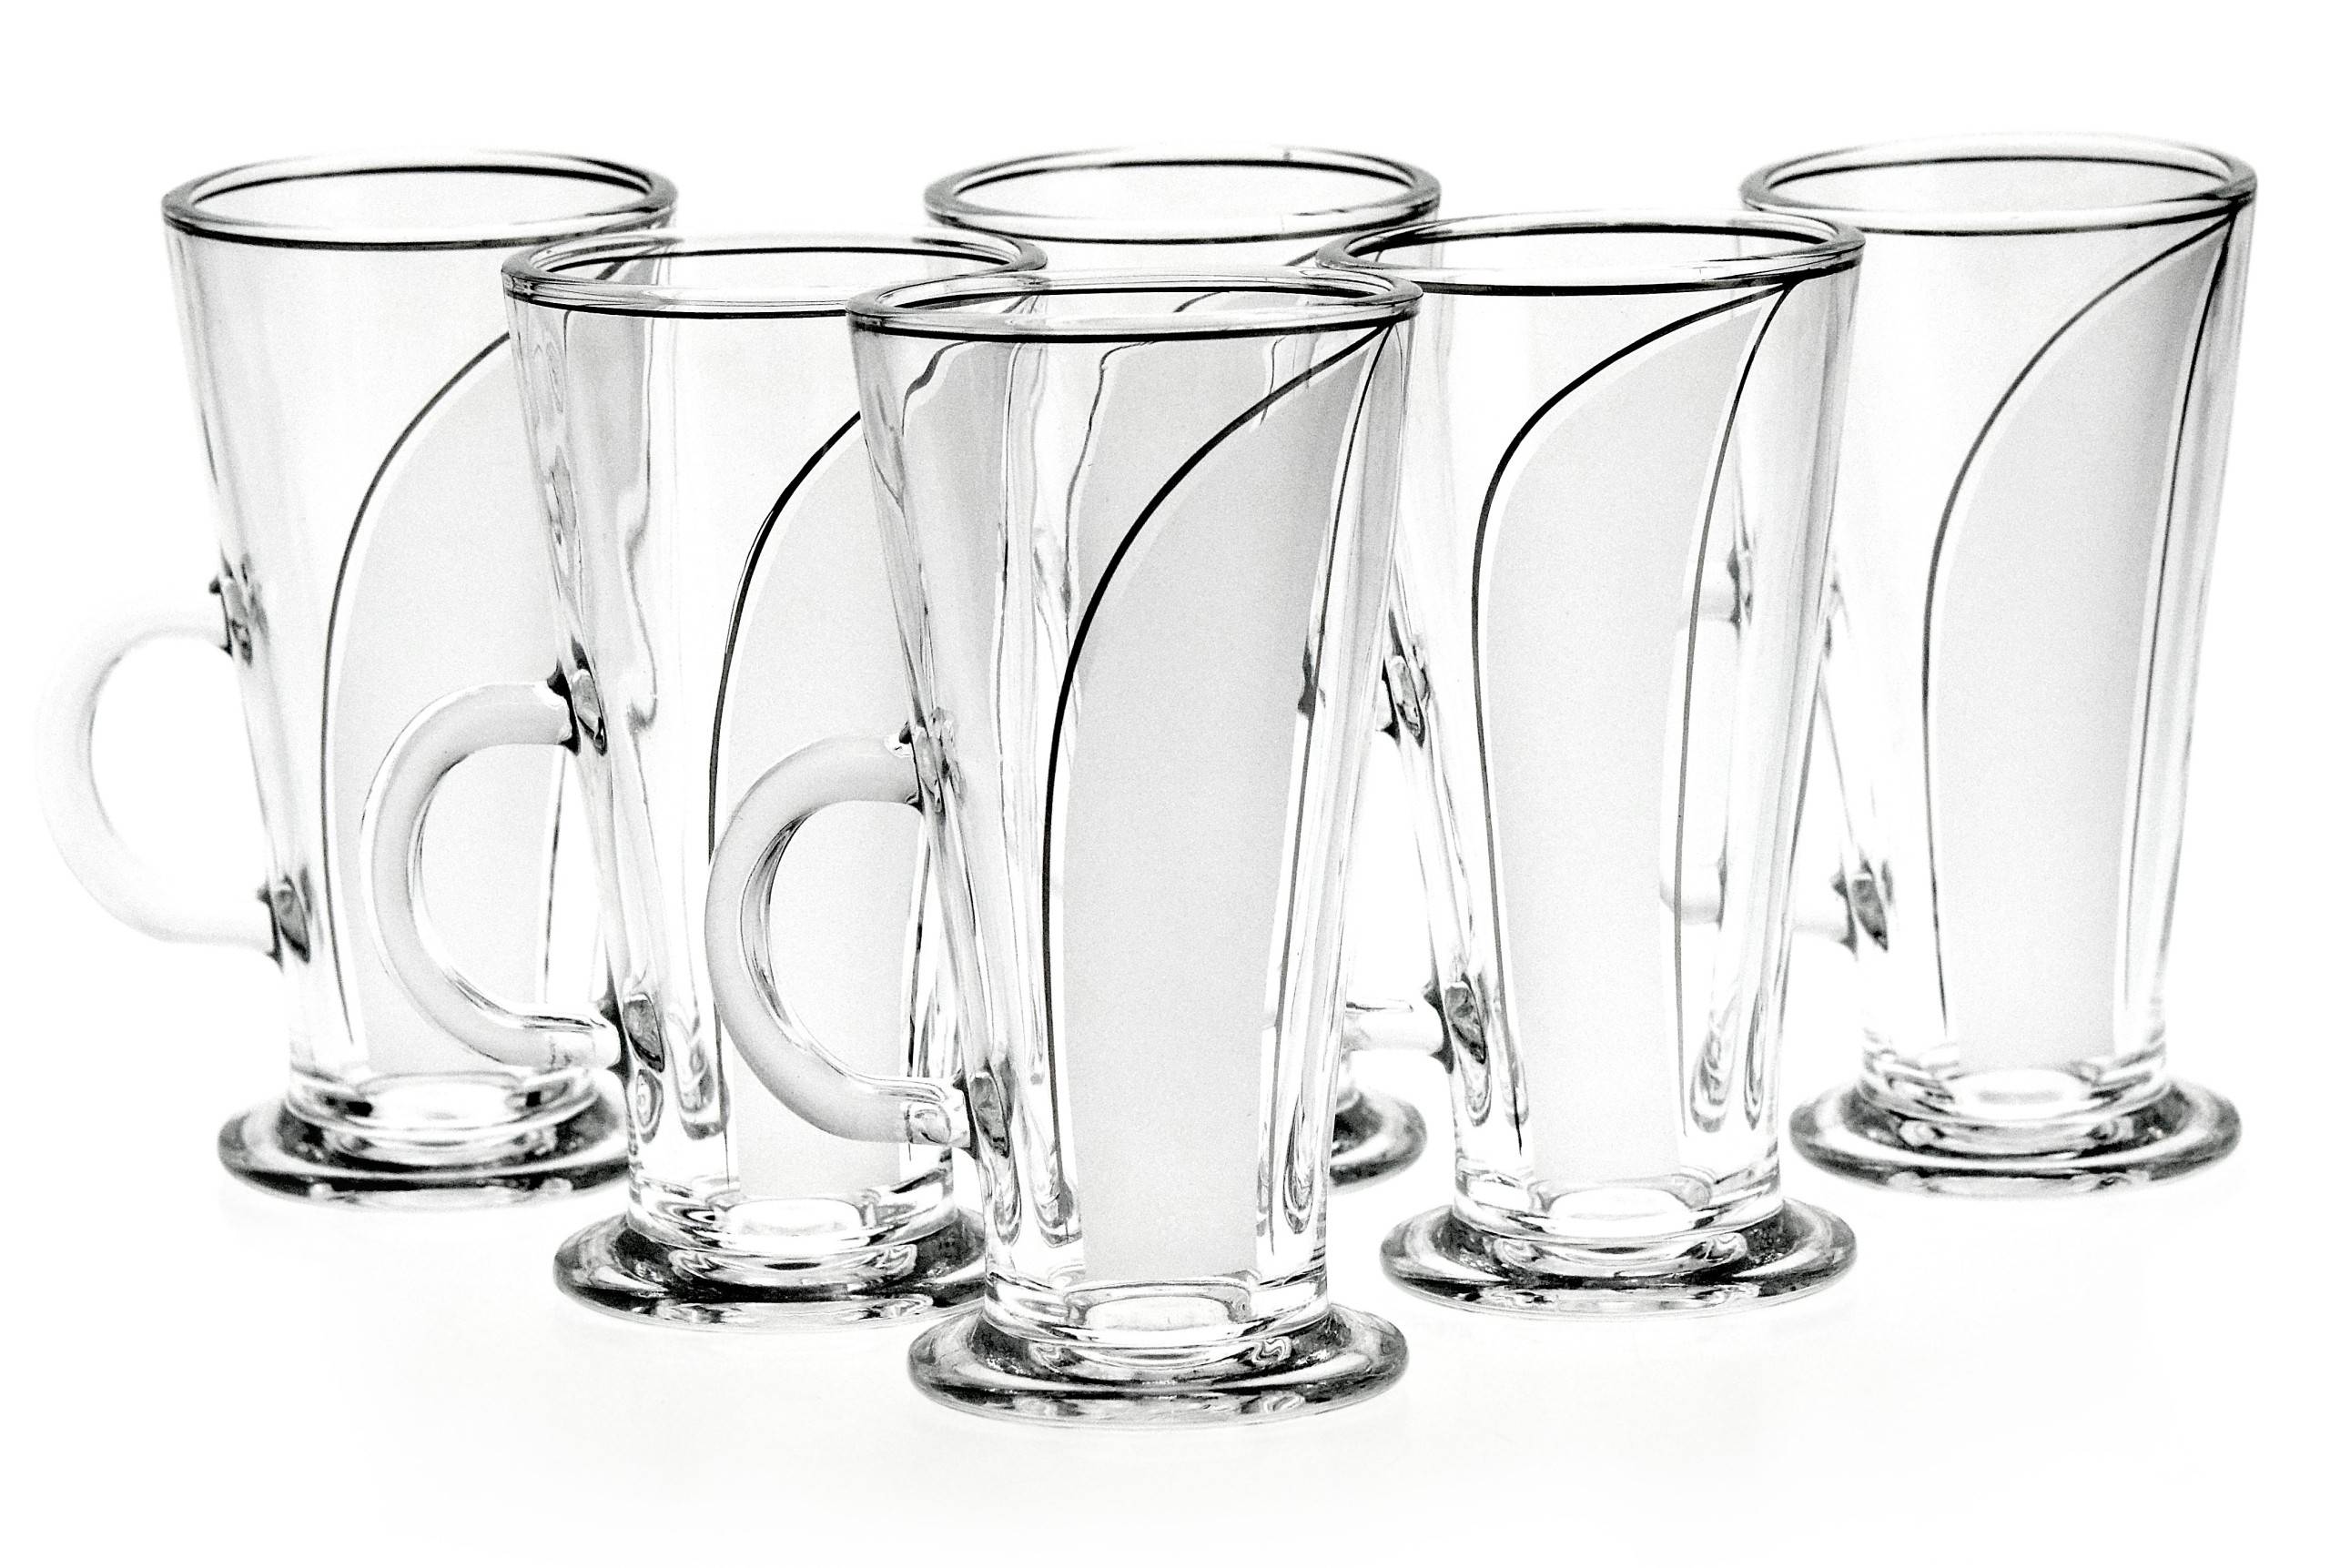 Посуда для латте: стакан, кружка, бокал или чашка?